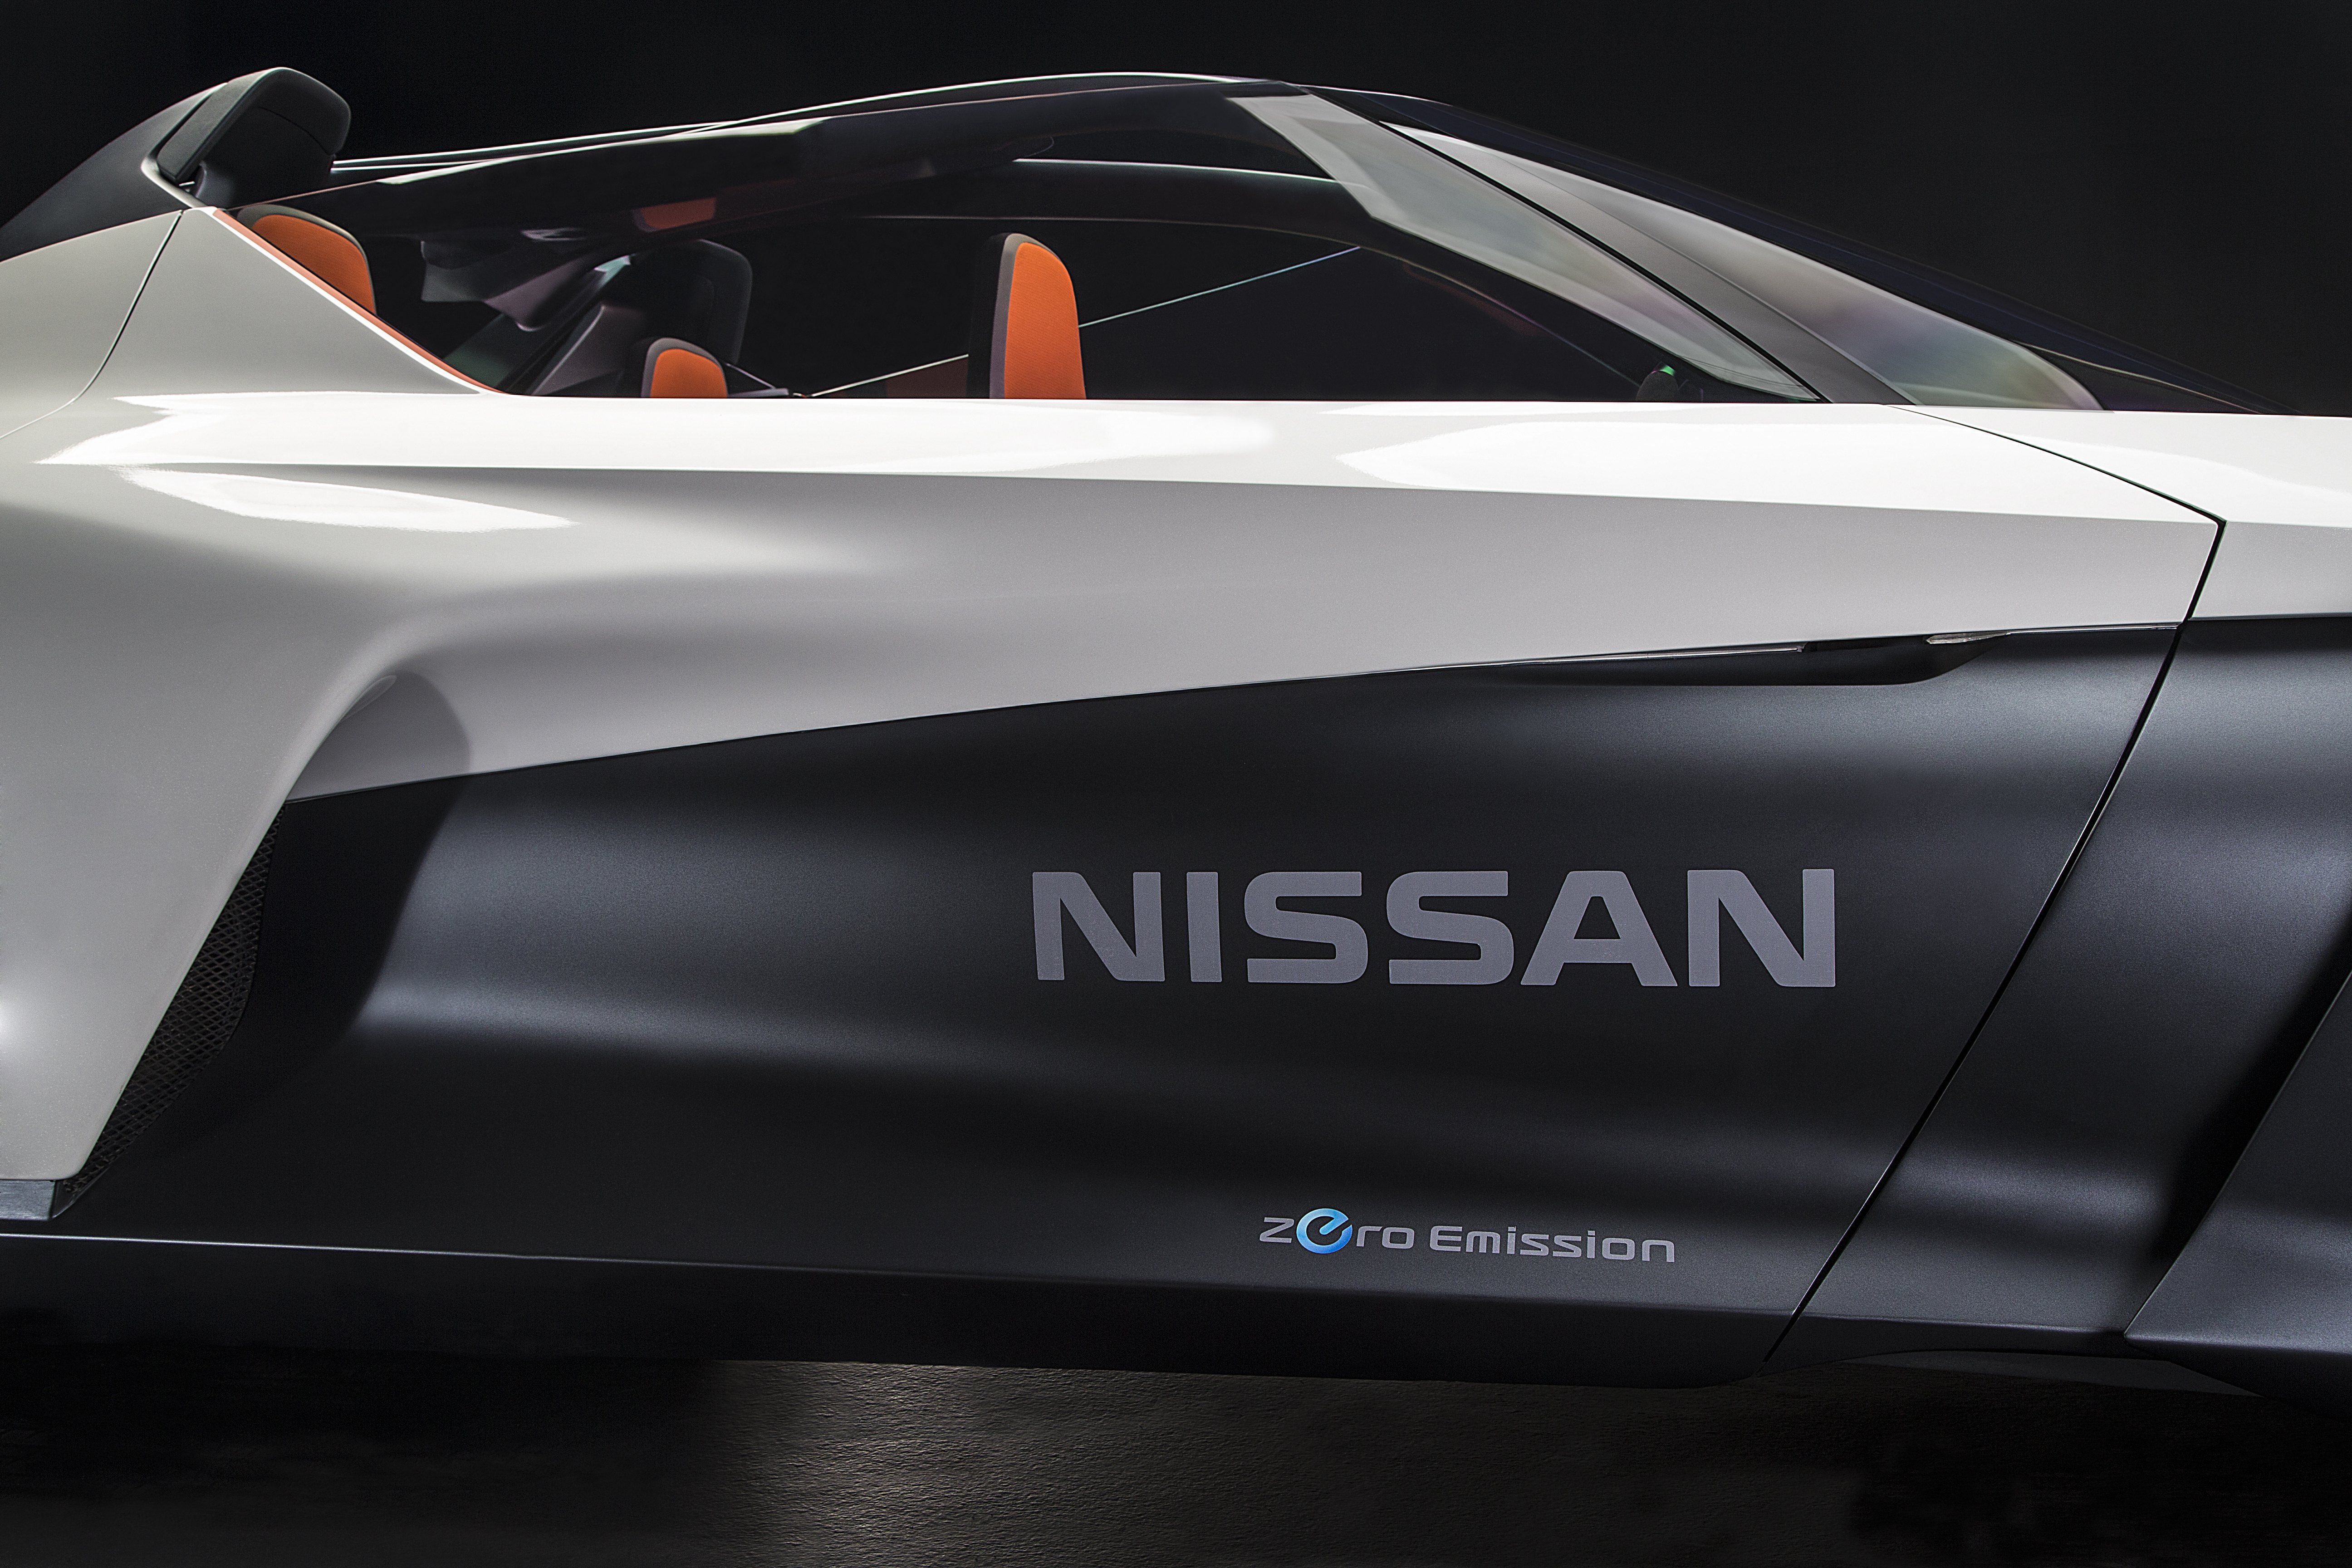 2017 Nissan Bladeglider Prototype